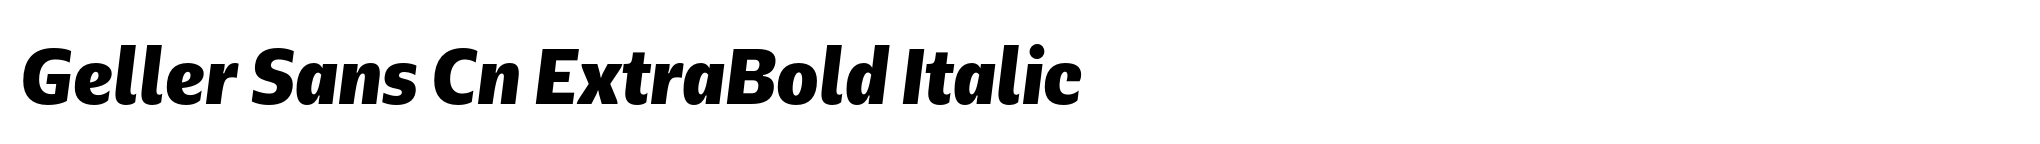 Geller Sans Cn ExtraBold Italic image